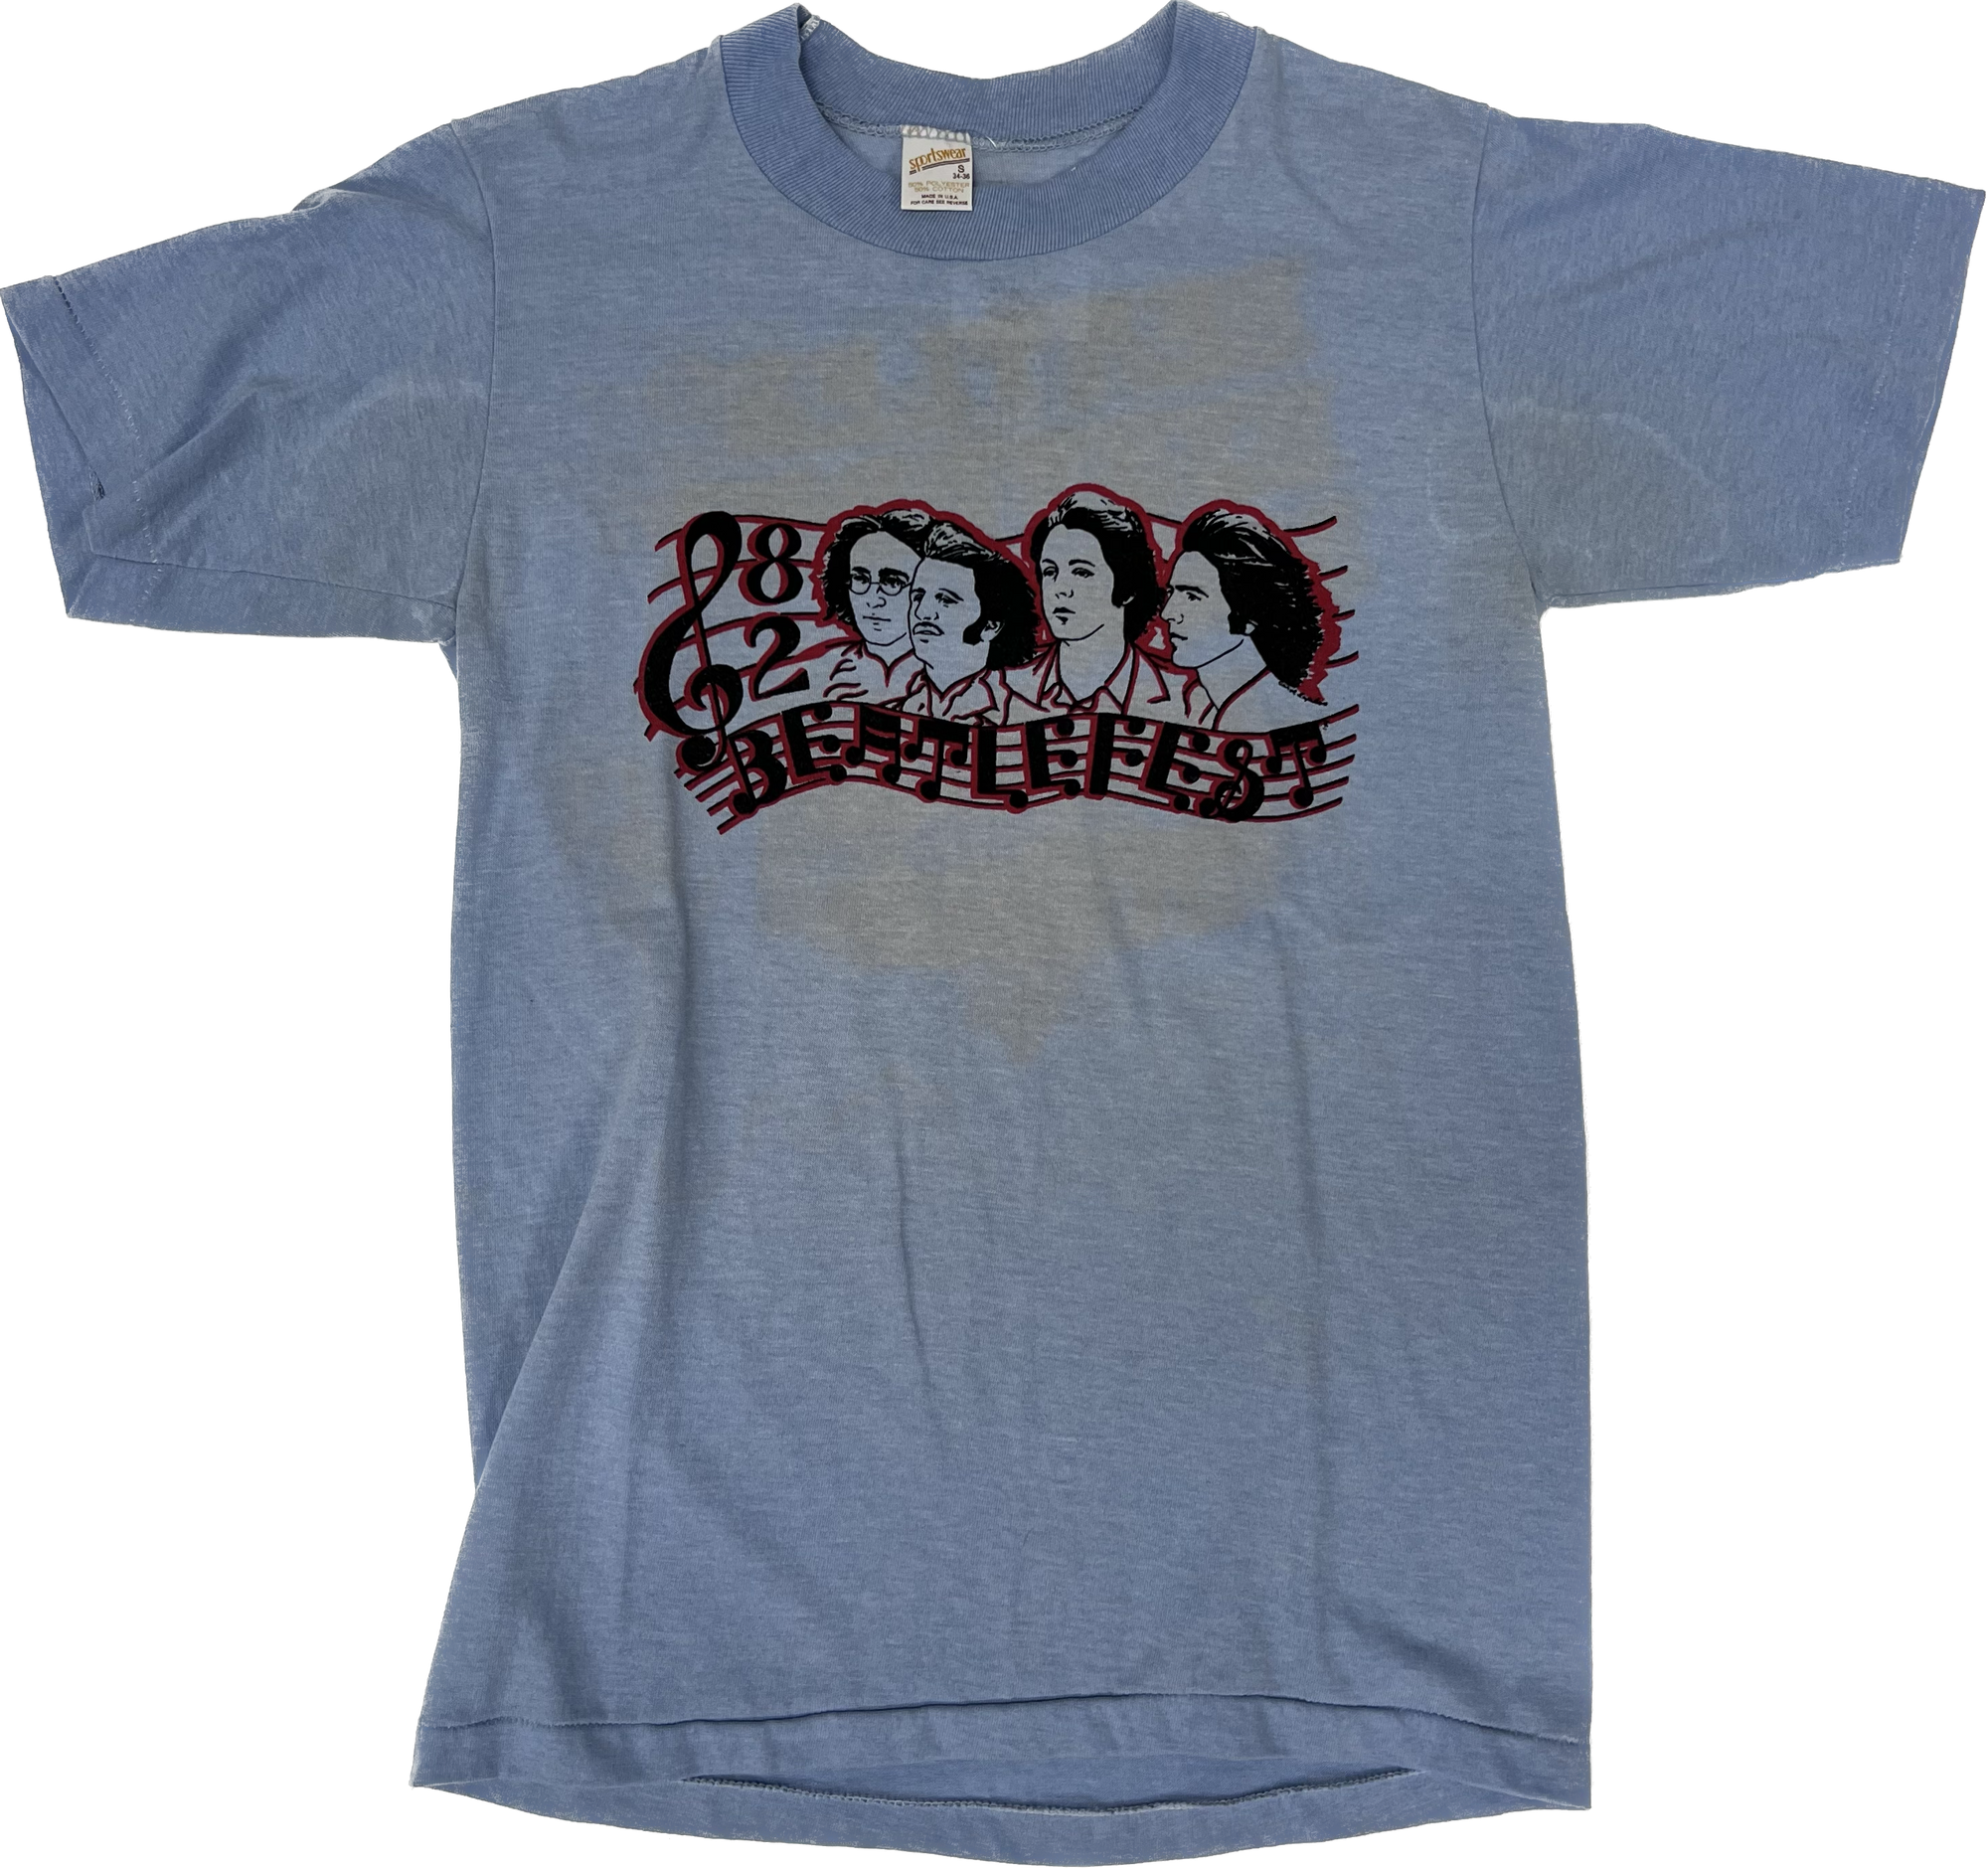 Beatlefest 1982 T-Shirt